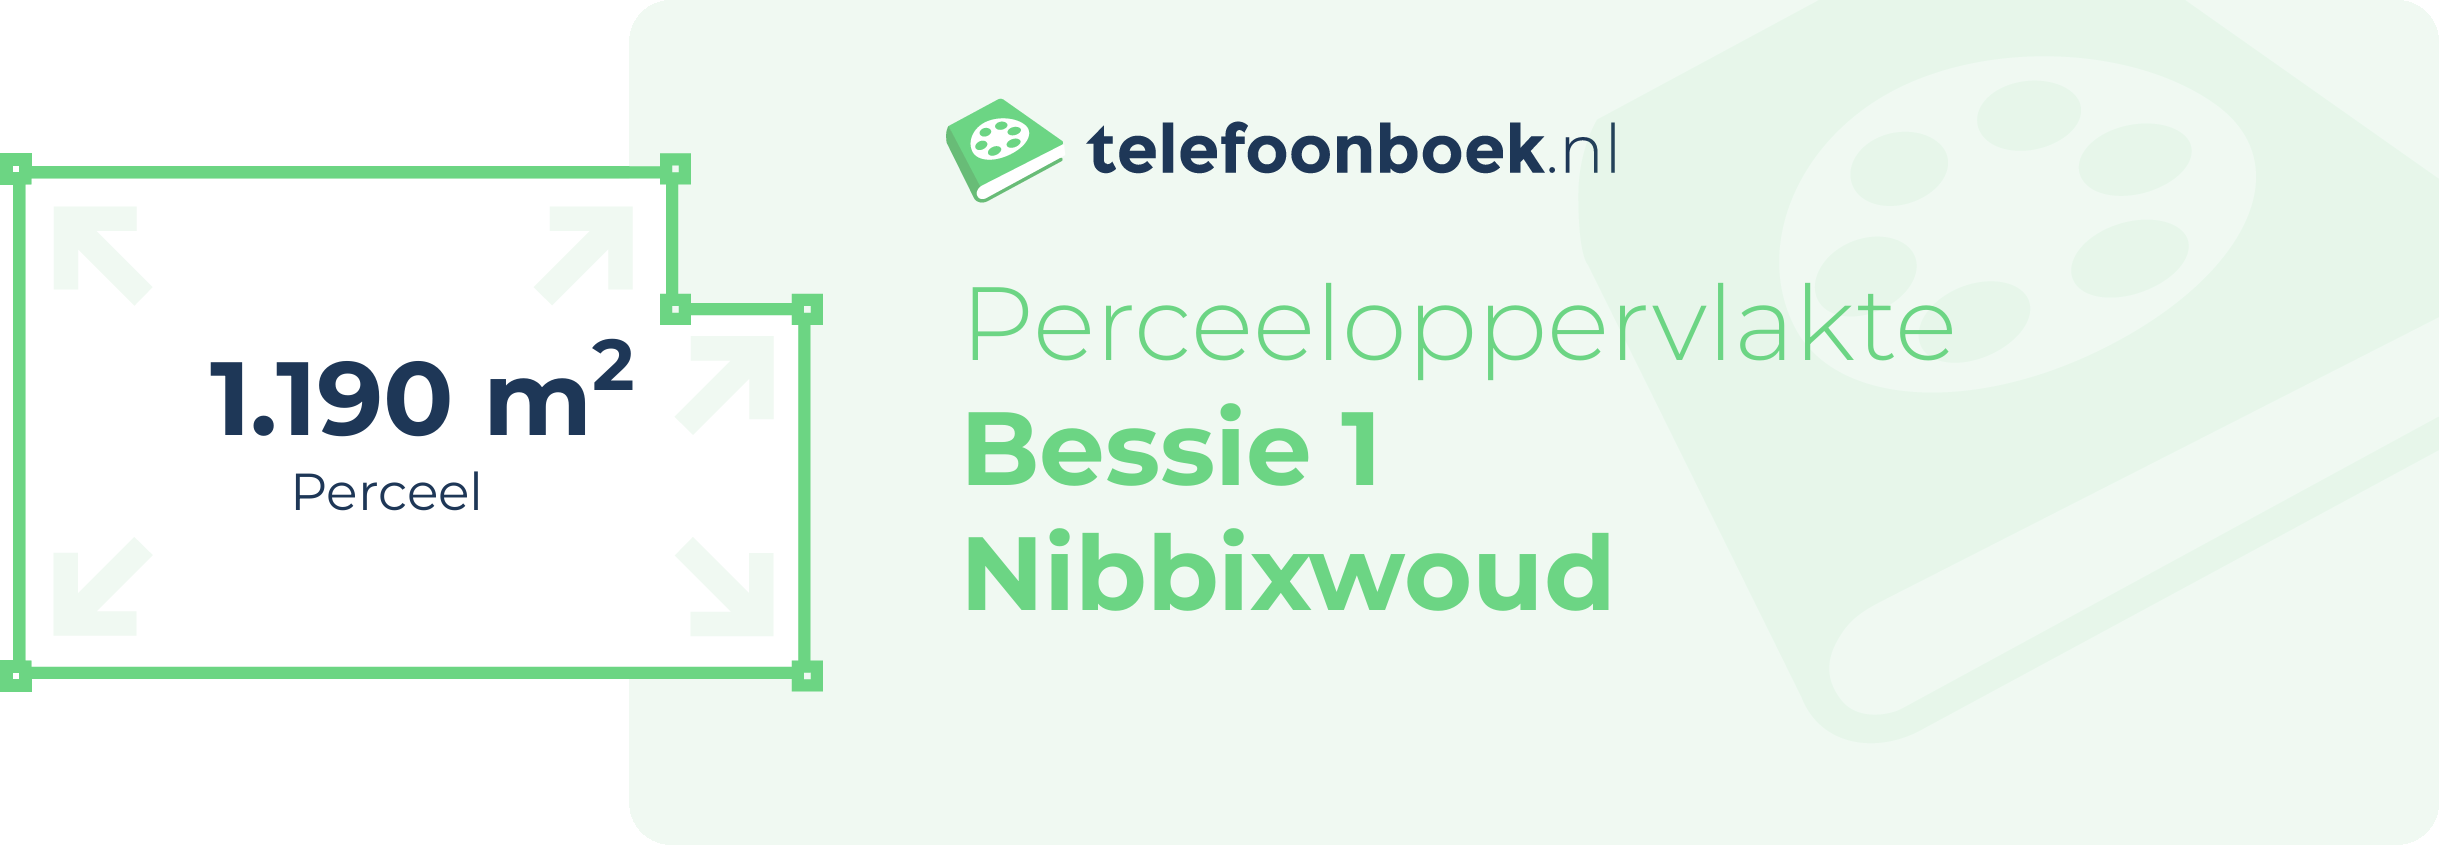 Perceeloppervlakte Bessie 1 Nibbixwoud